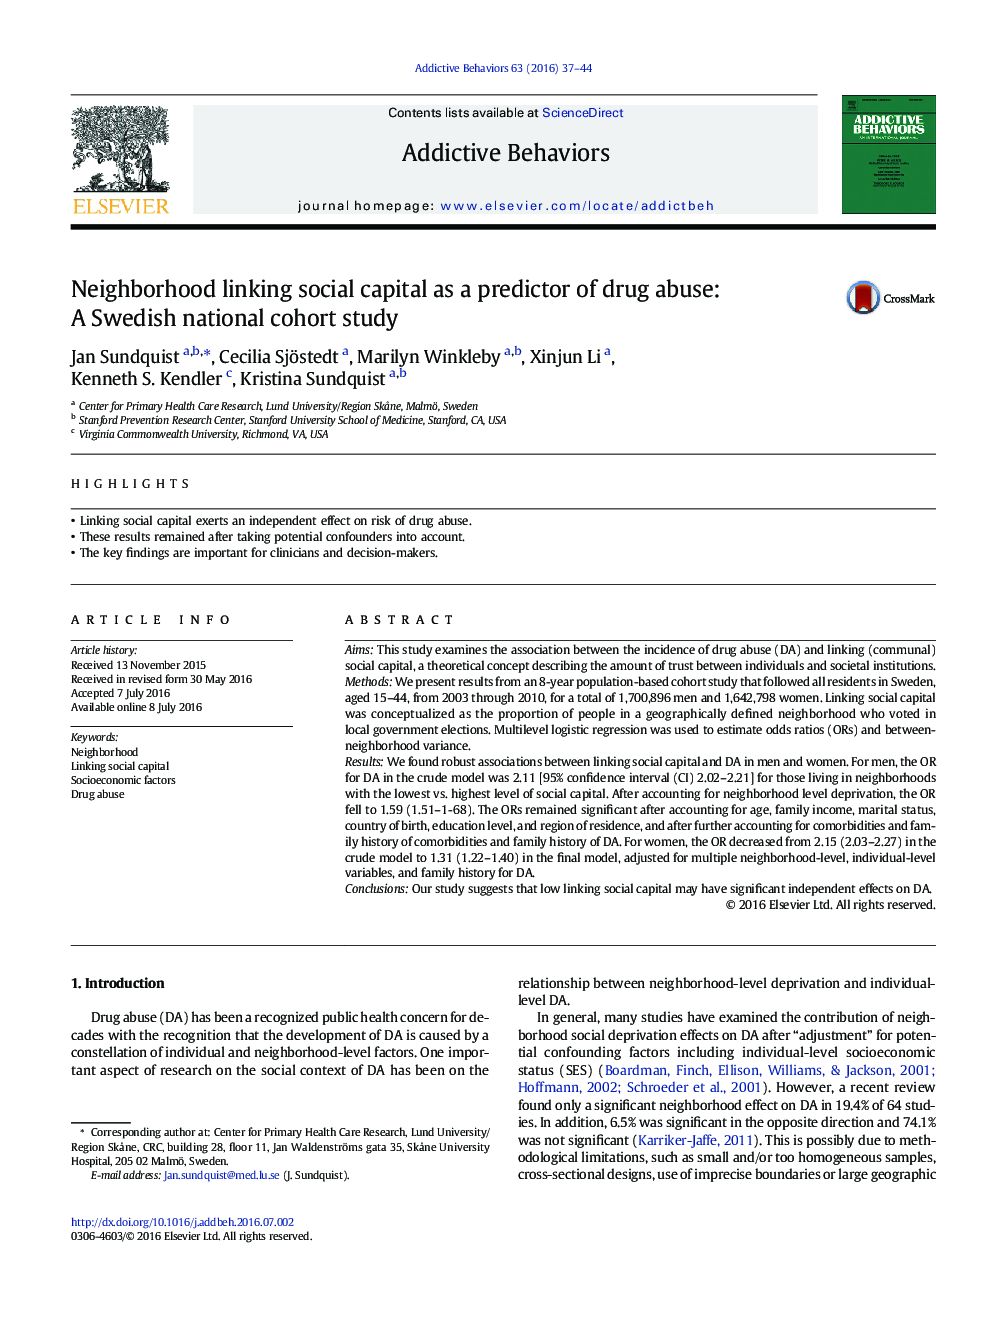 Neighborhood linking social capital as a predictor of drug abuse: A Swedish national cohort study